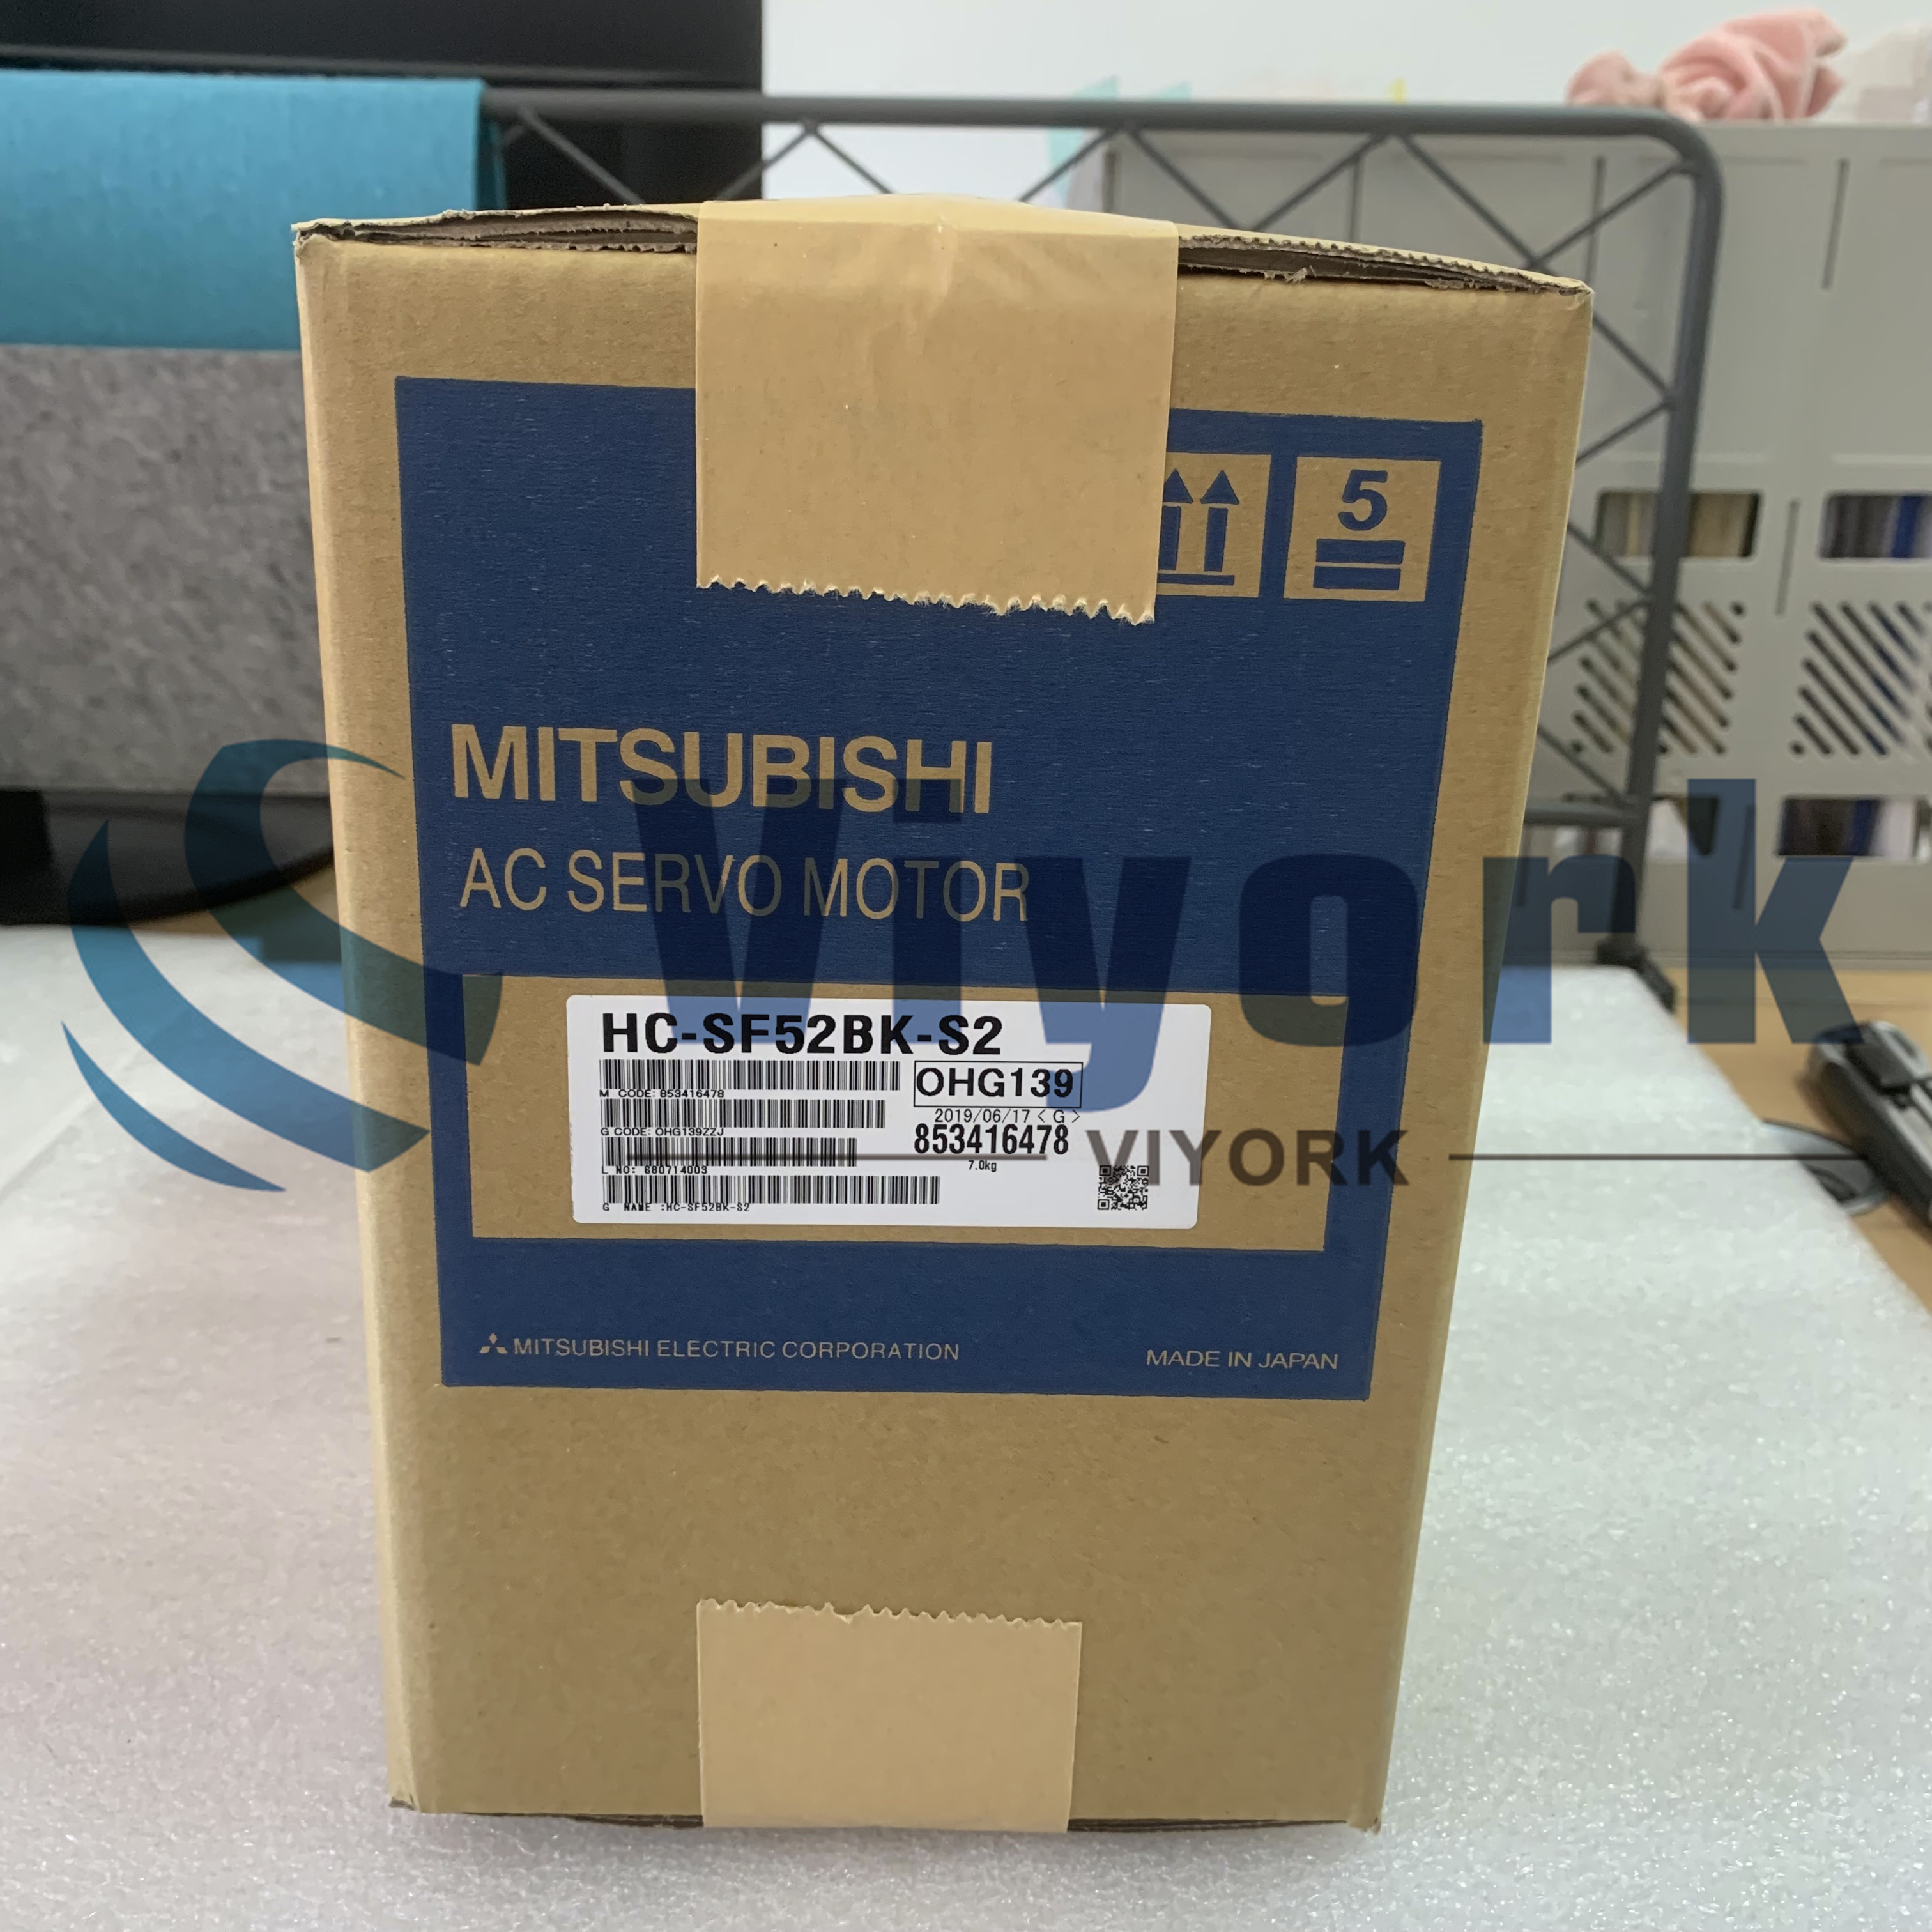 Mitsubishi HC-SF52BK-S2 AC SERVO MOTOR 2000 RPM 800W 480 VAC NEW